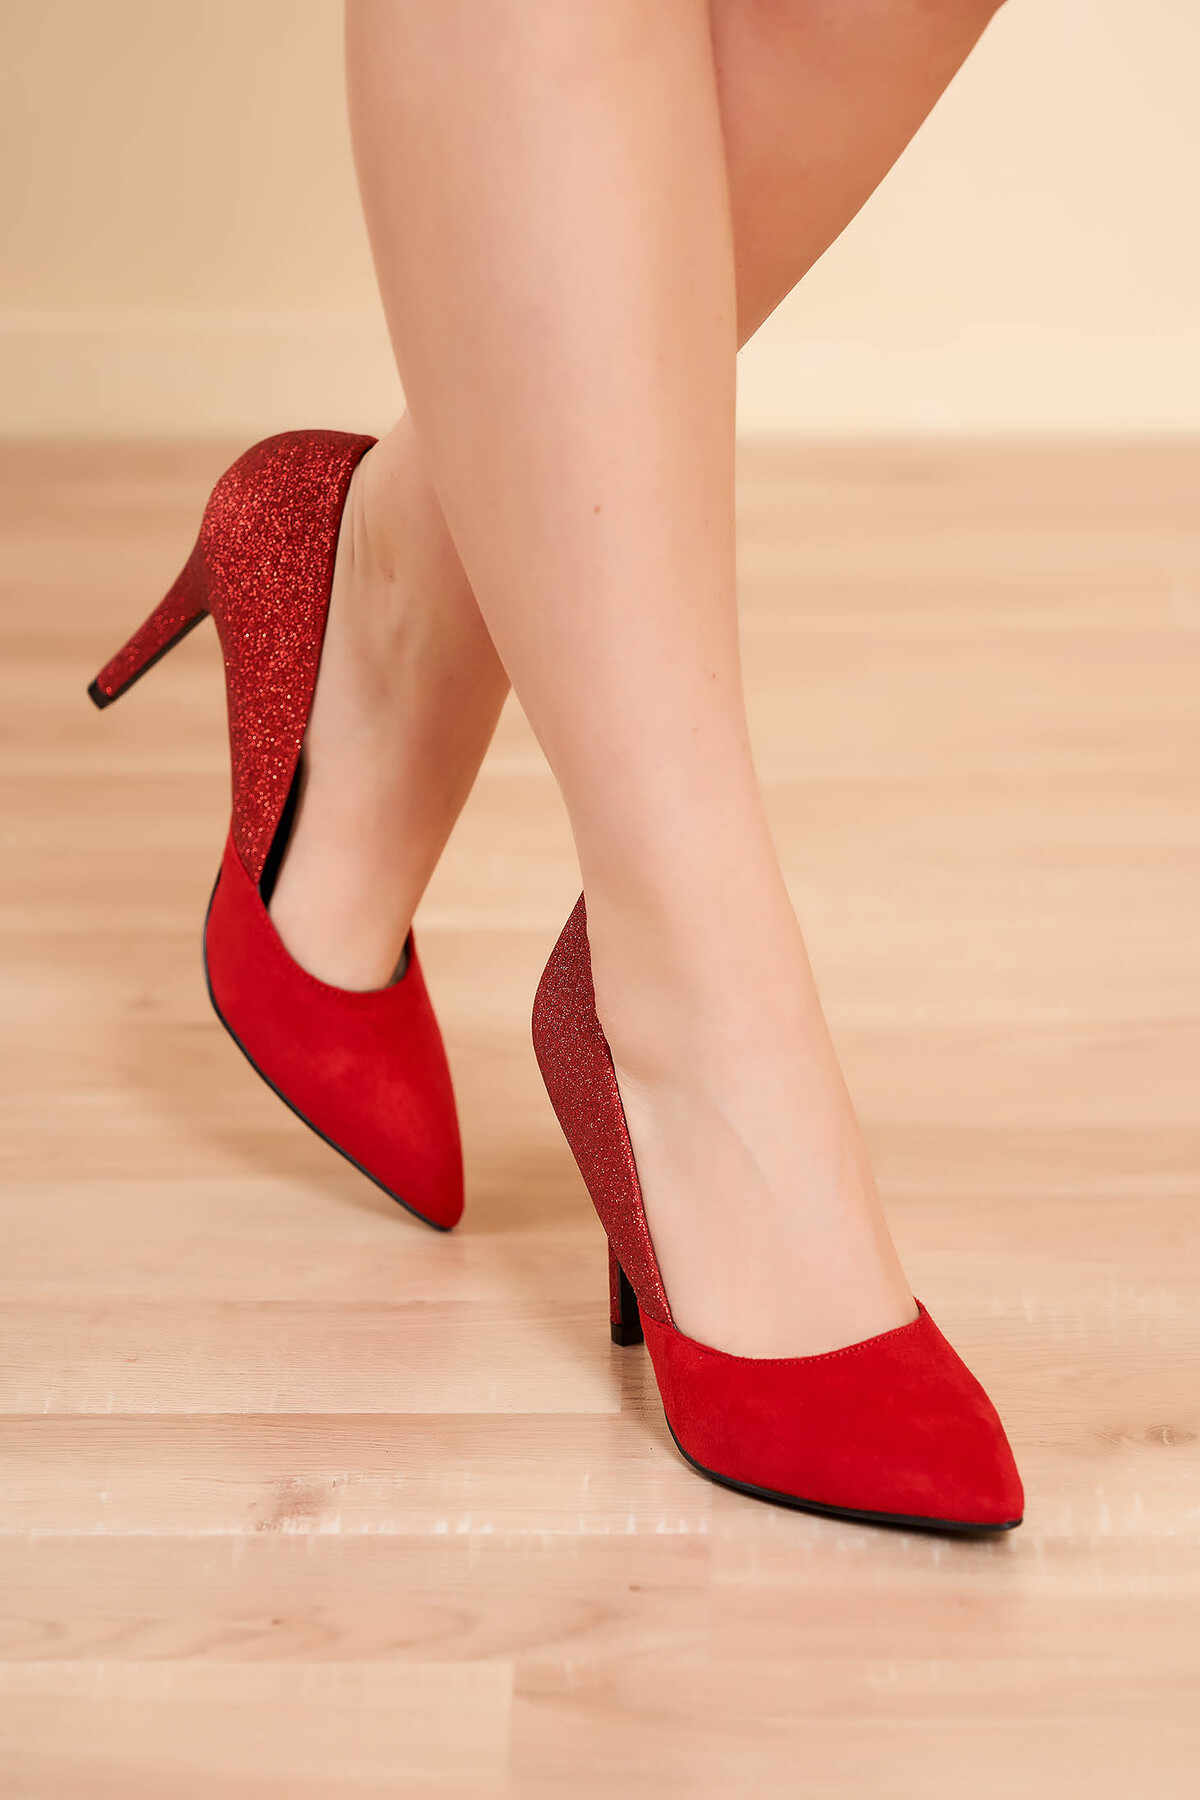 Pantofi rosu elegant din piele ecologica cu toc inalt si aplicatii cu sclipici